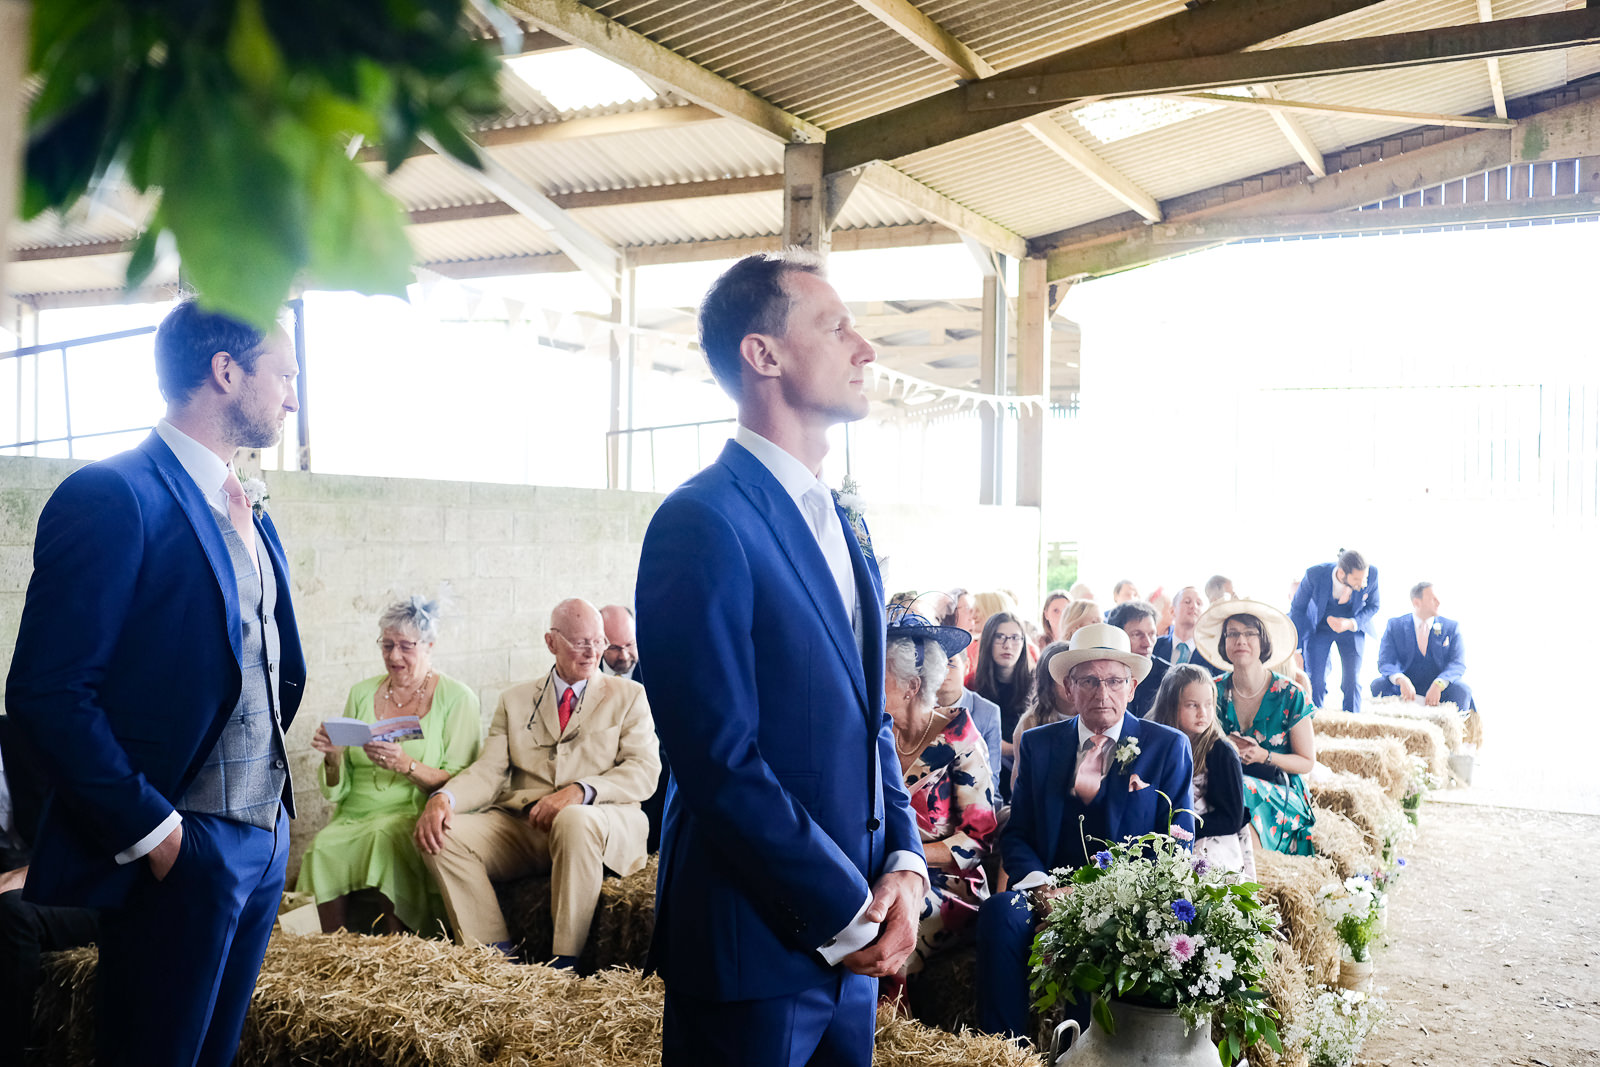 Roscarrock Farm wedding in Cornwall 027.jpg